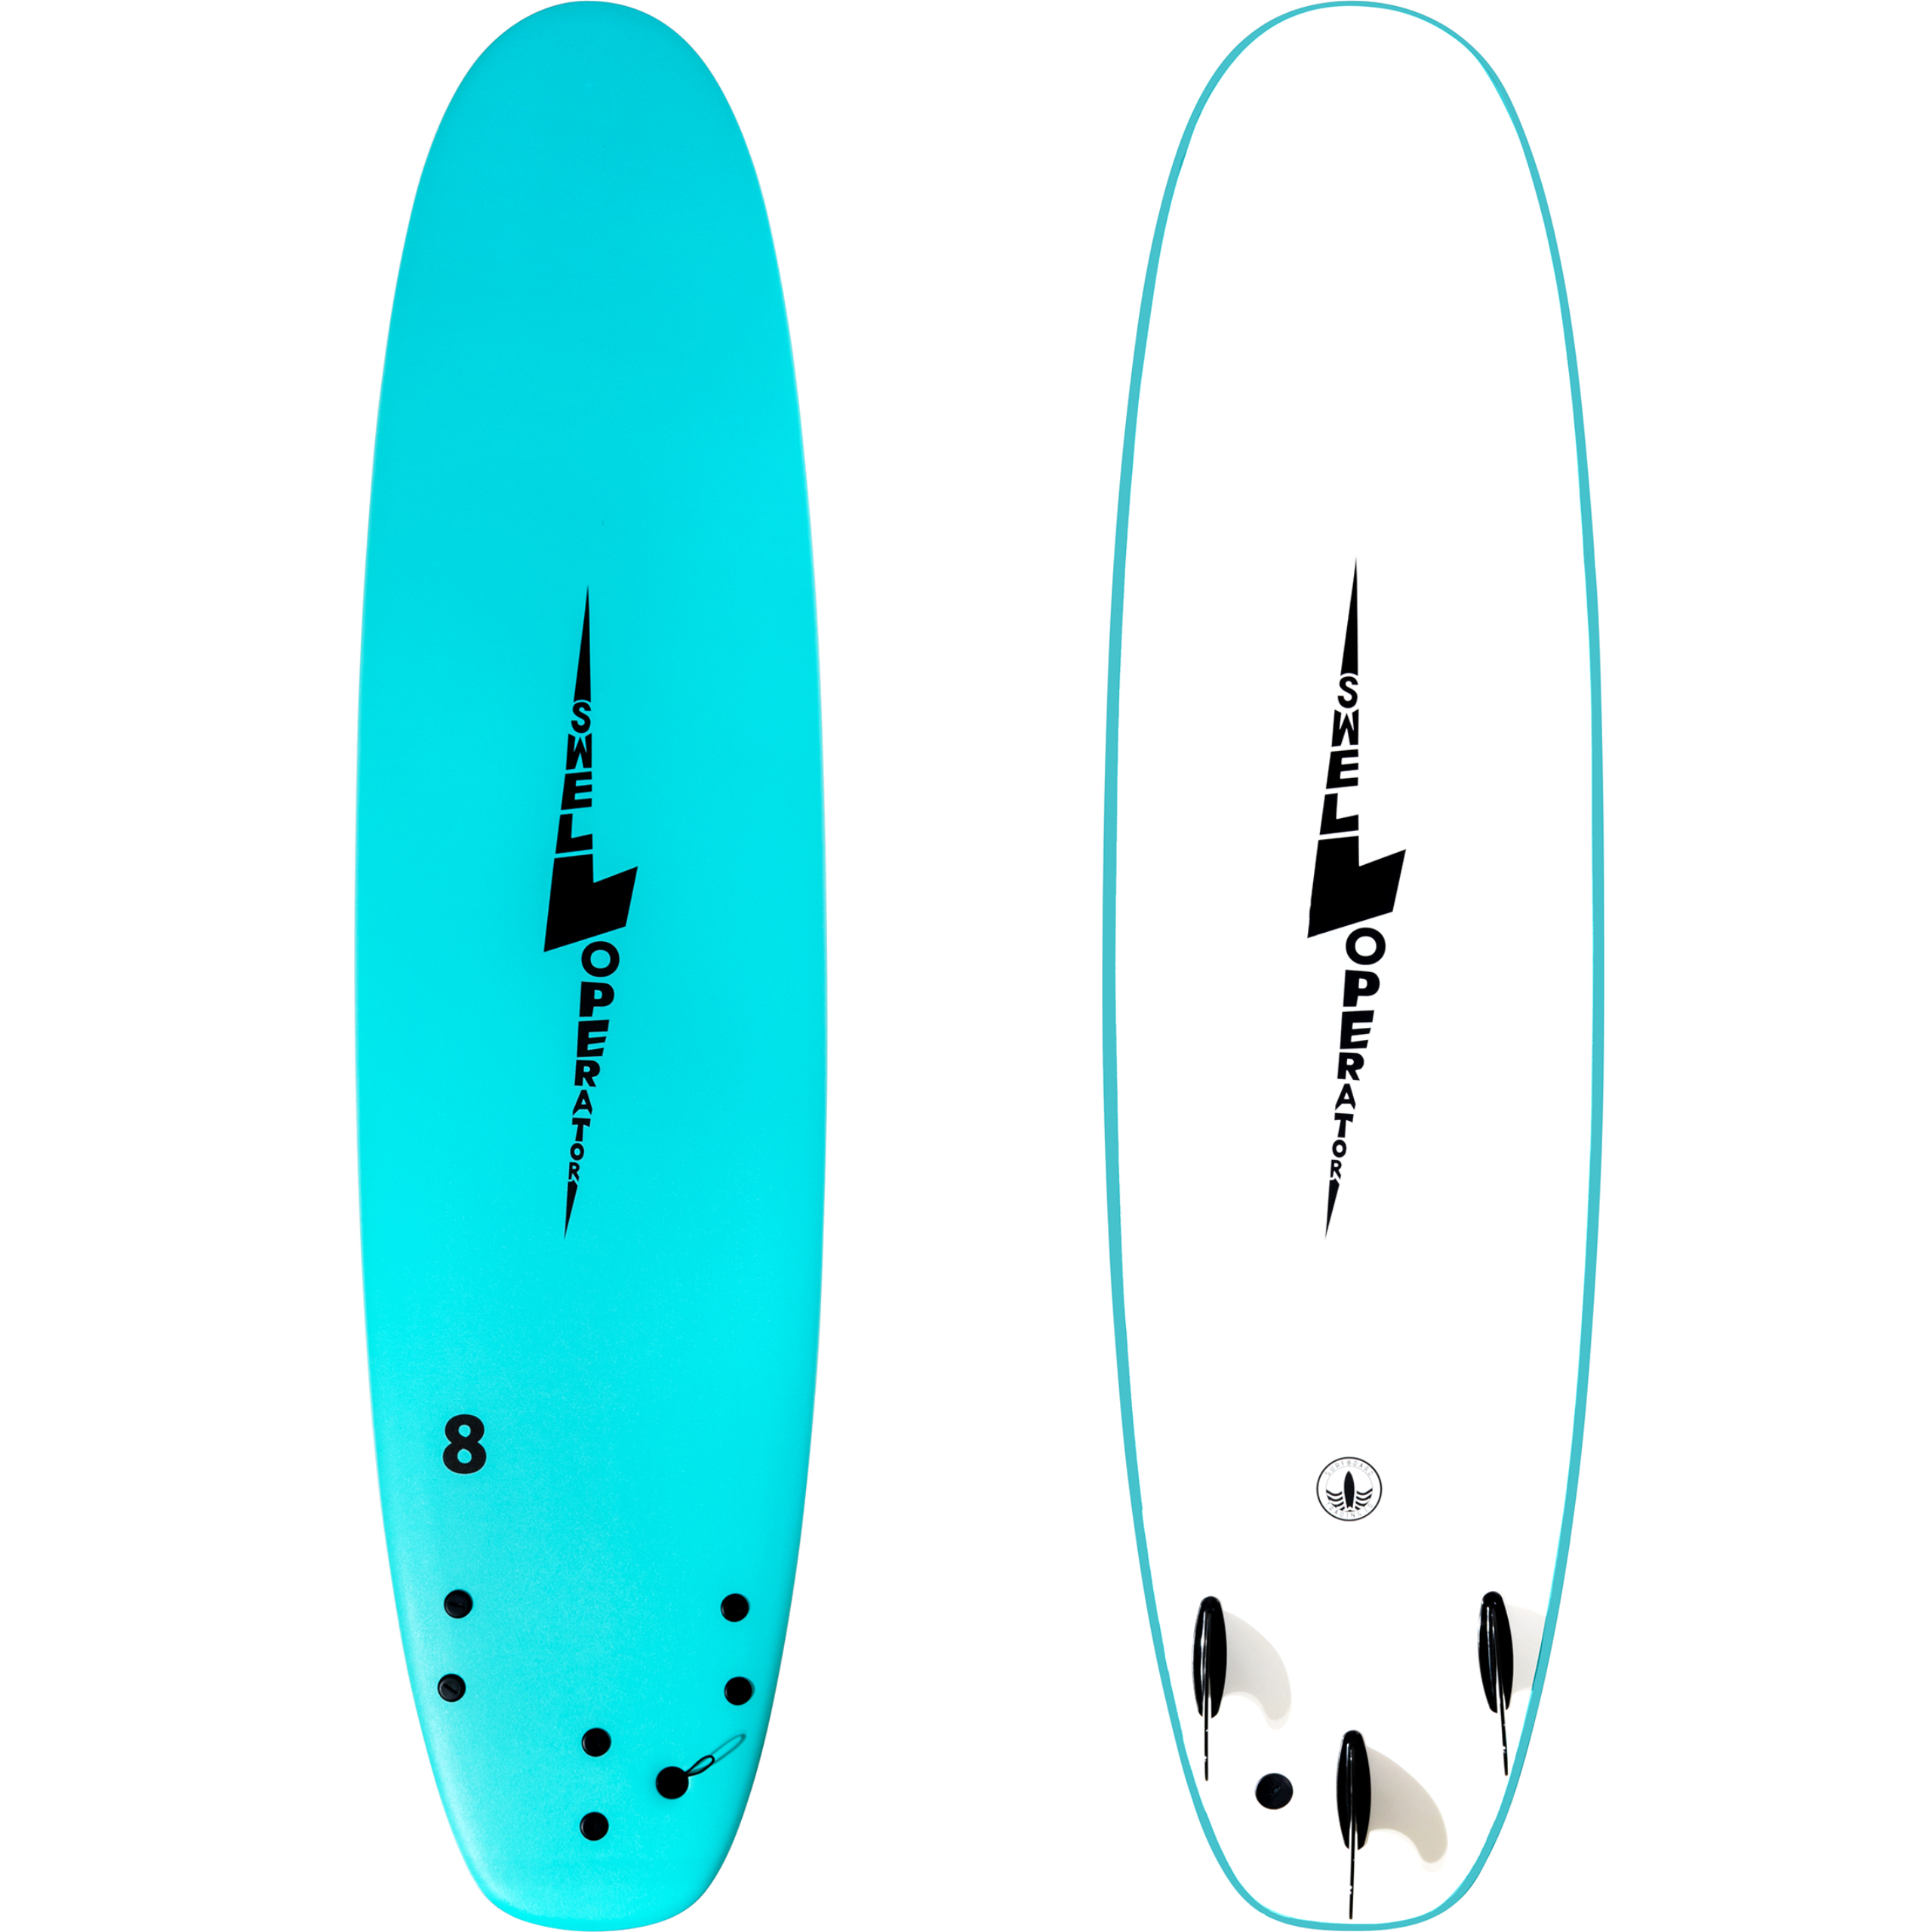 8' Swell Operator Foam Surfboard - Five Color Options